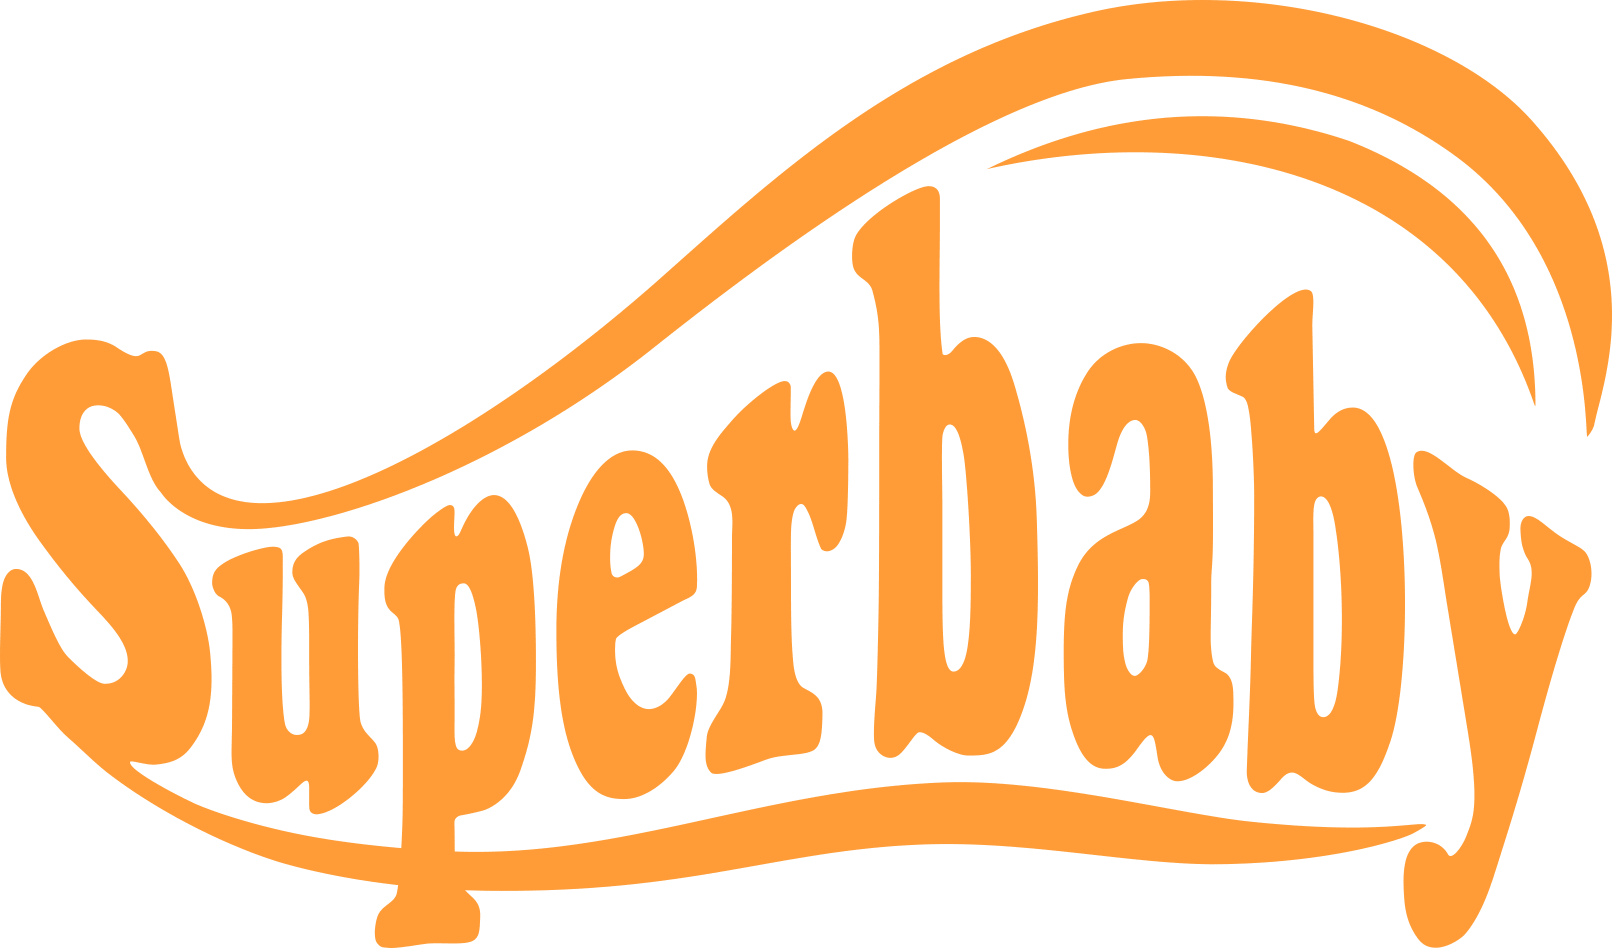 Tienda Online de Superbaby